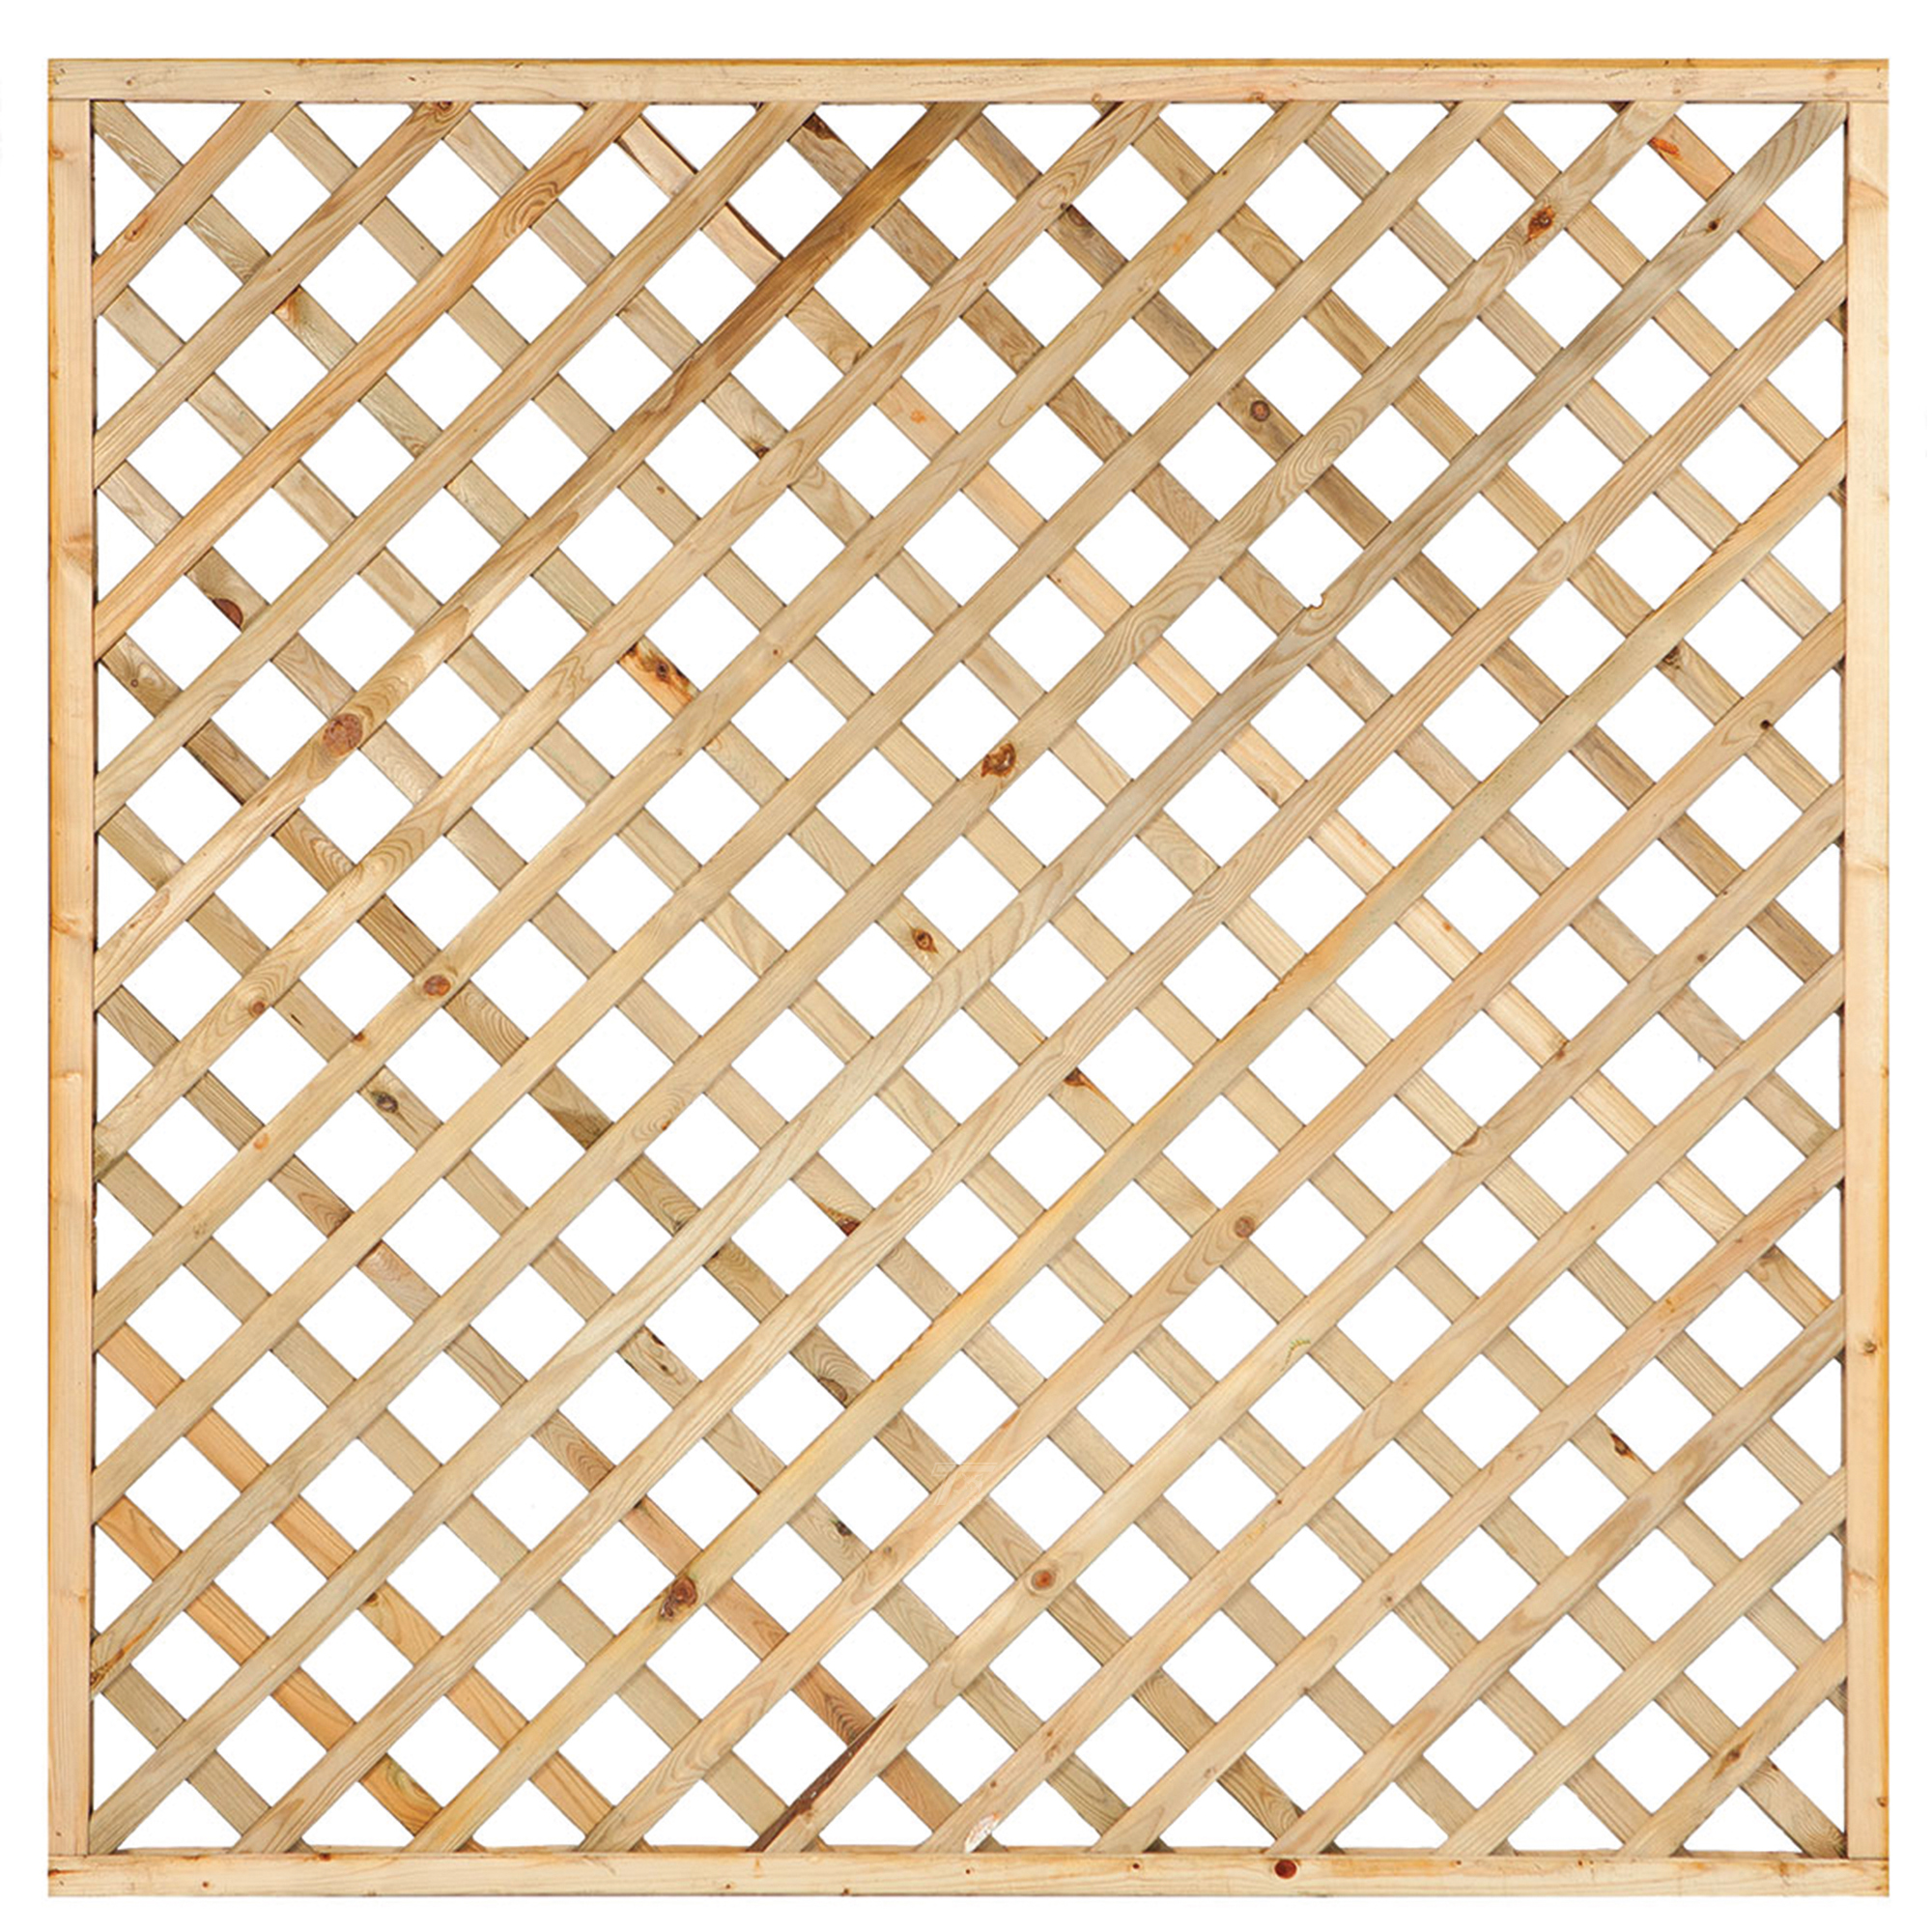 Spalier diagonal mit geradem Rahmen, 60 cm